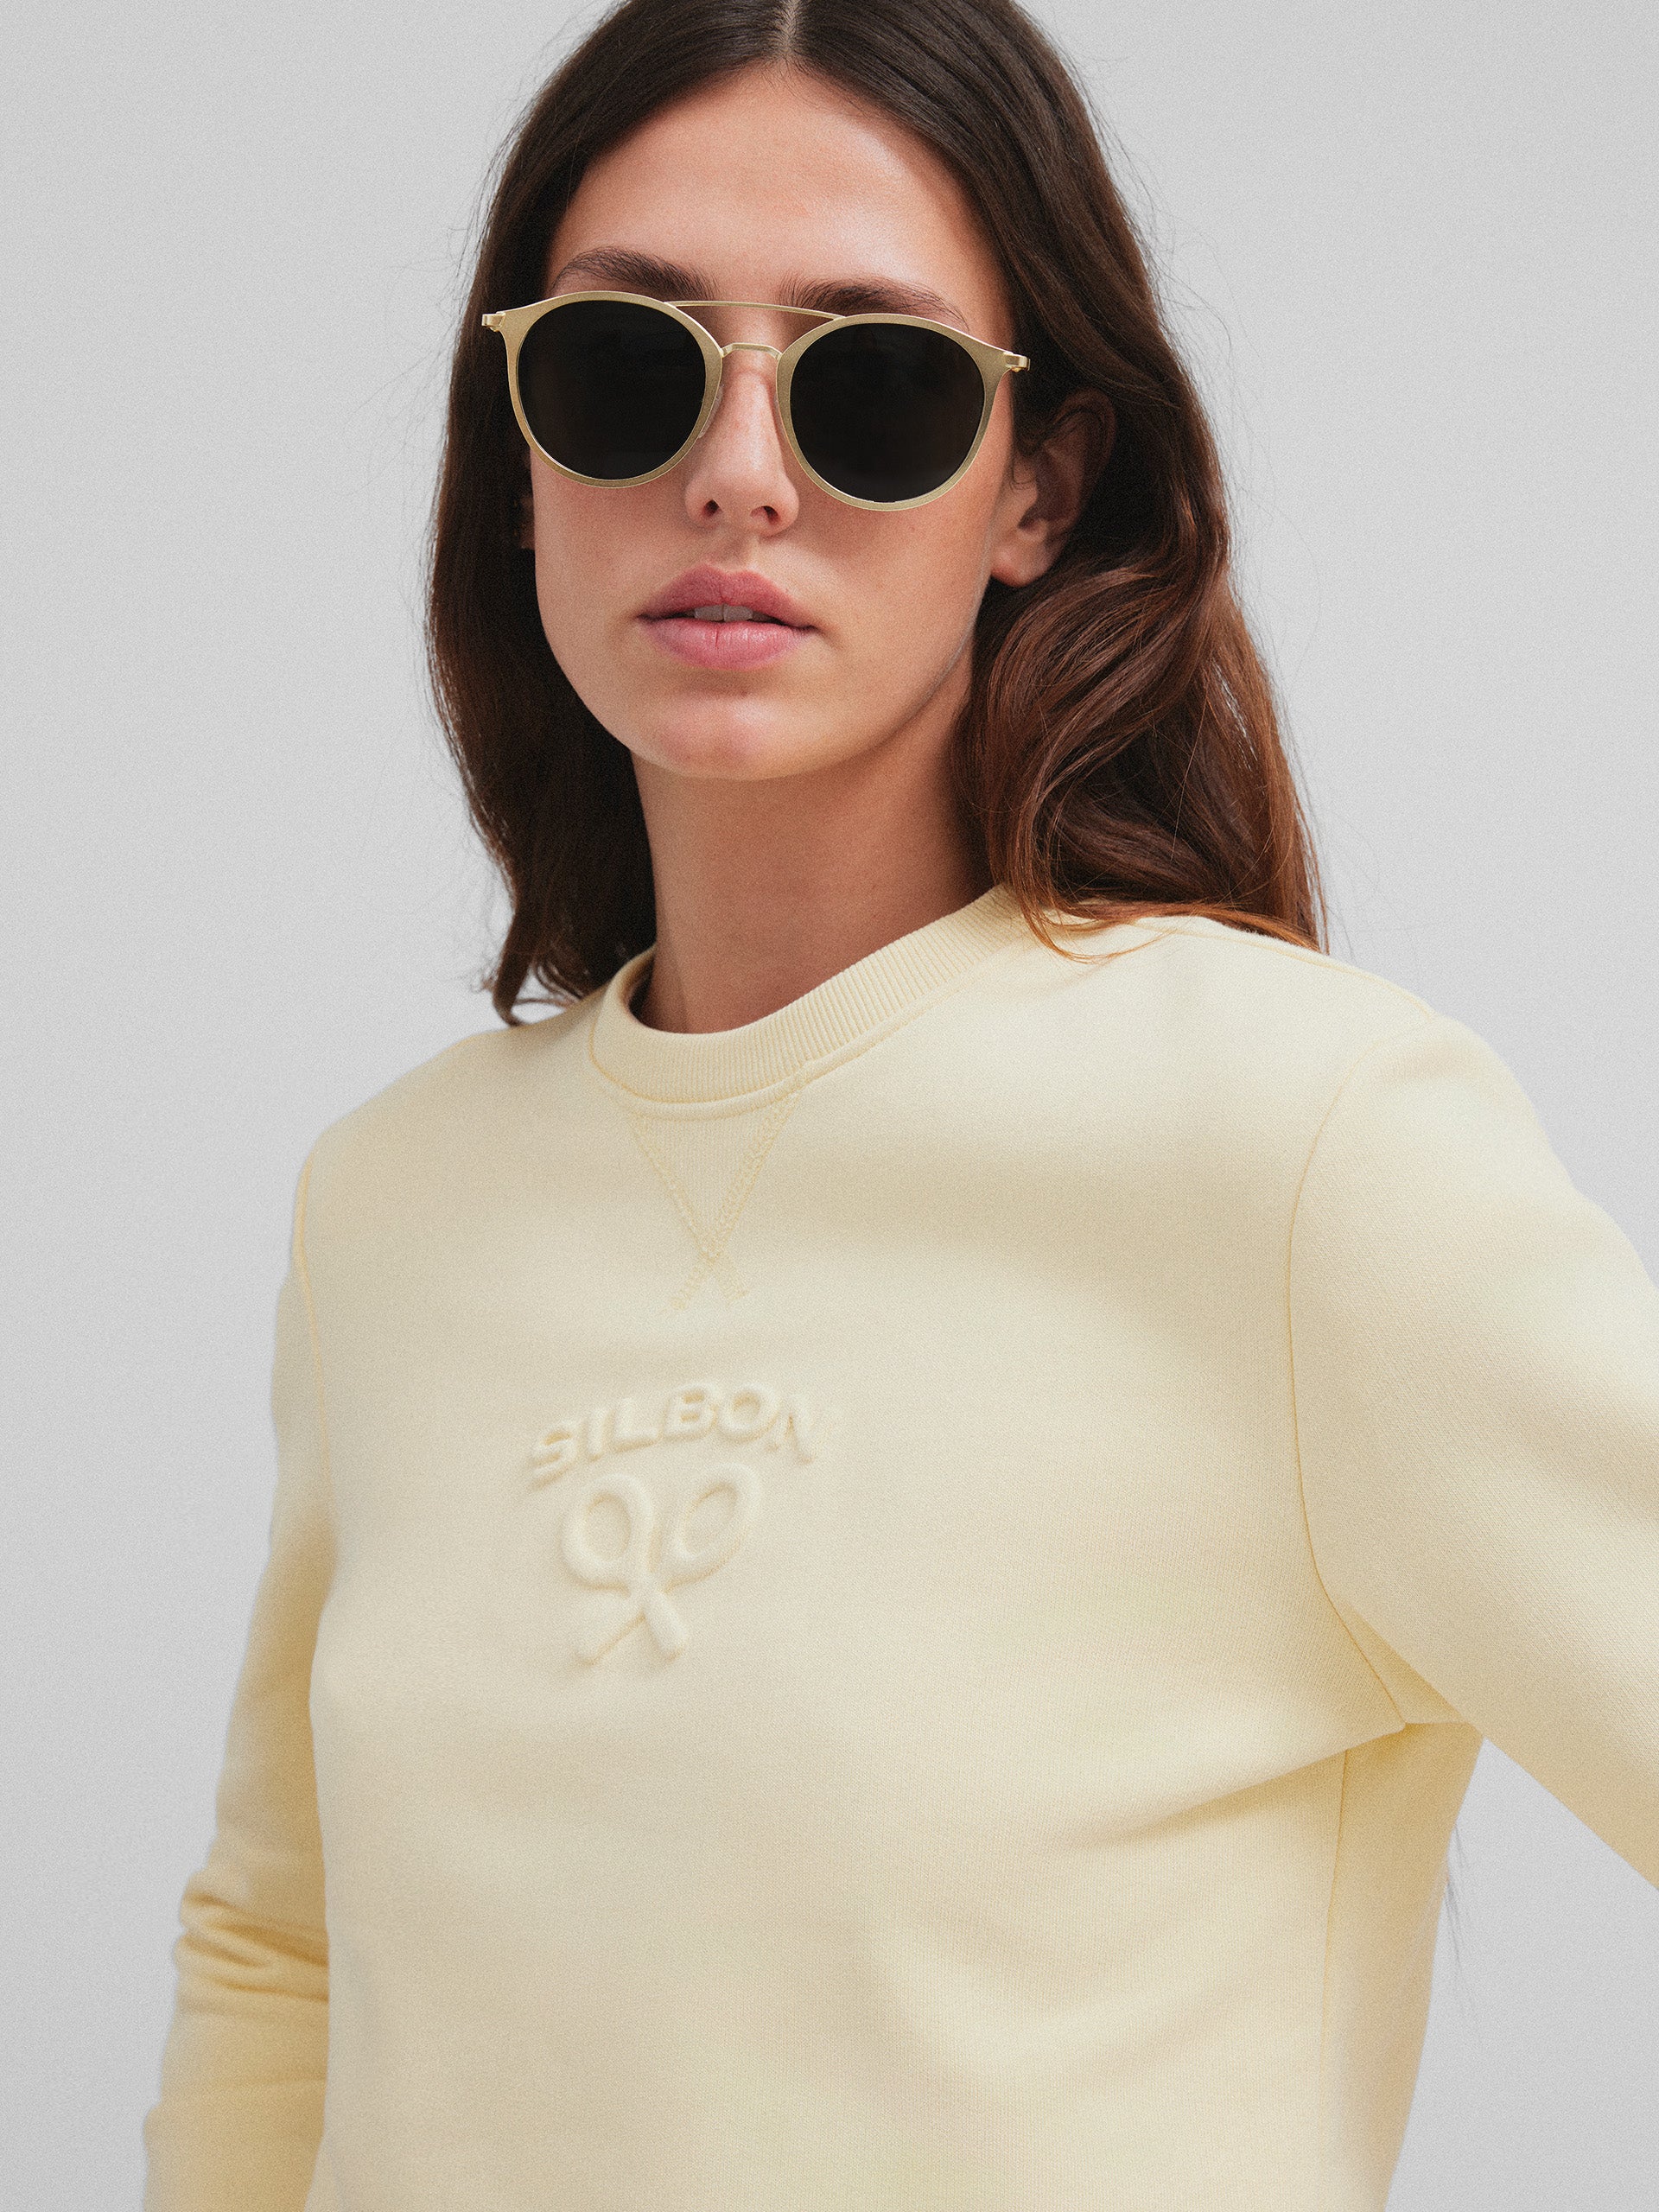 Silbon classic yellow woman sweatshirt